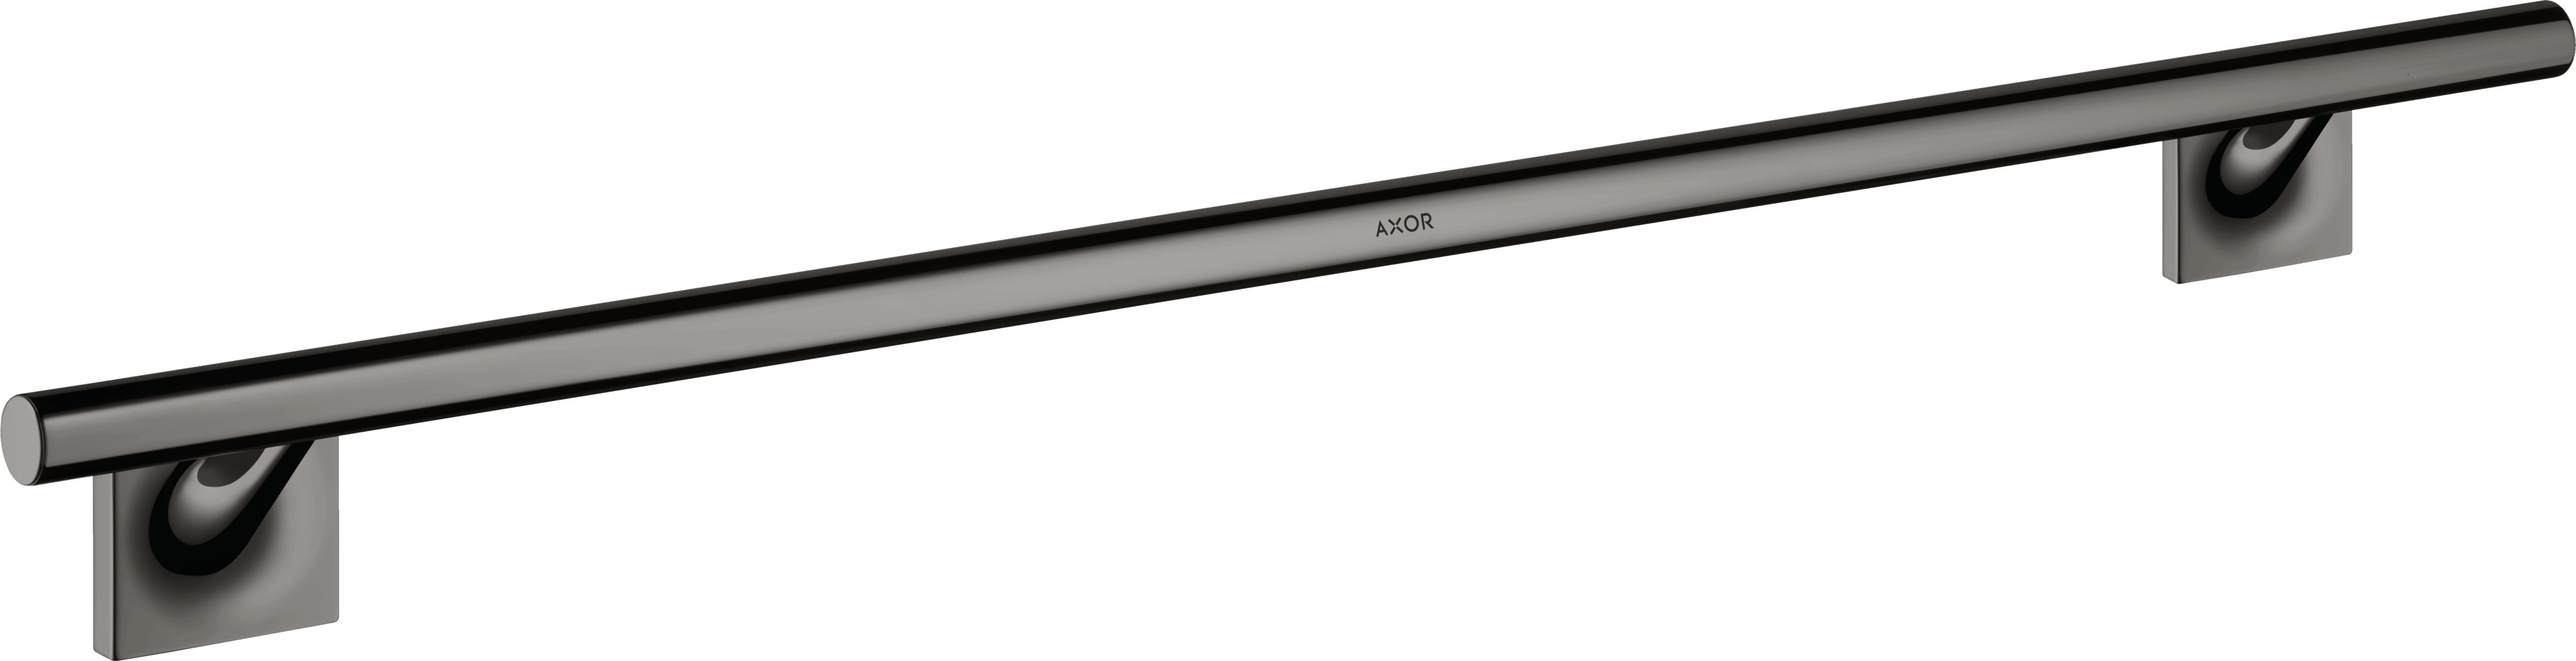 AXOR Starck Organic Badetuchhalter 600 mm Polished Black Chrome